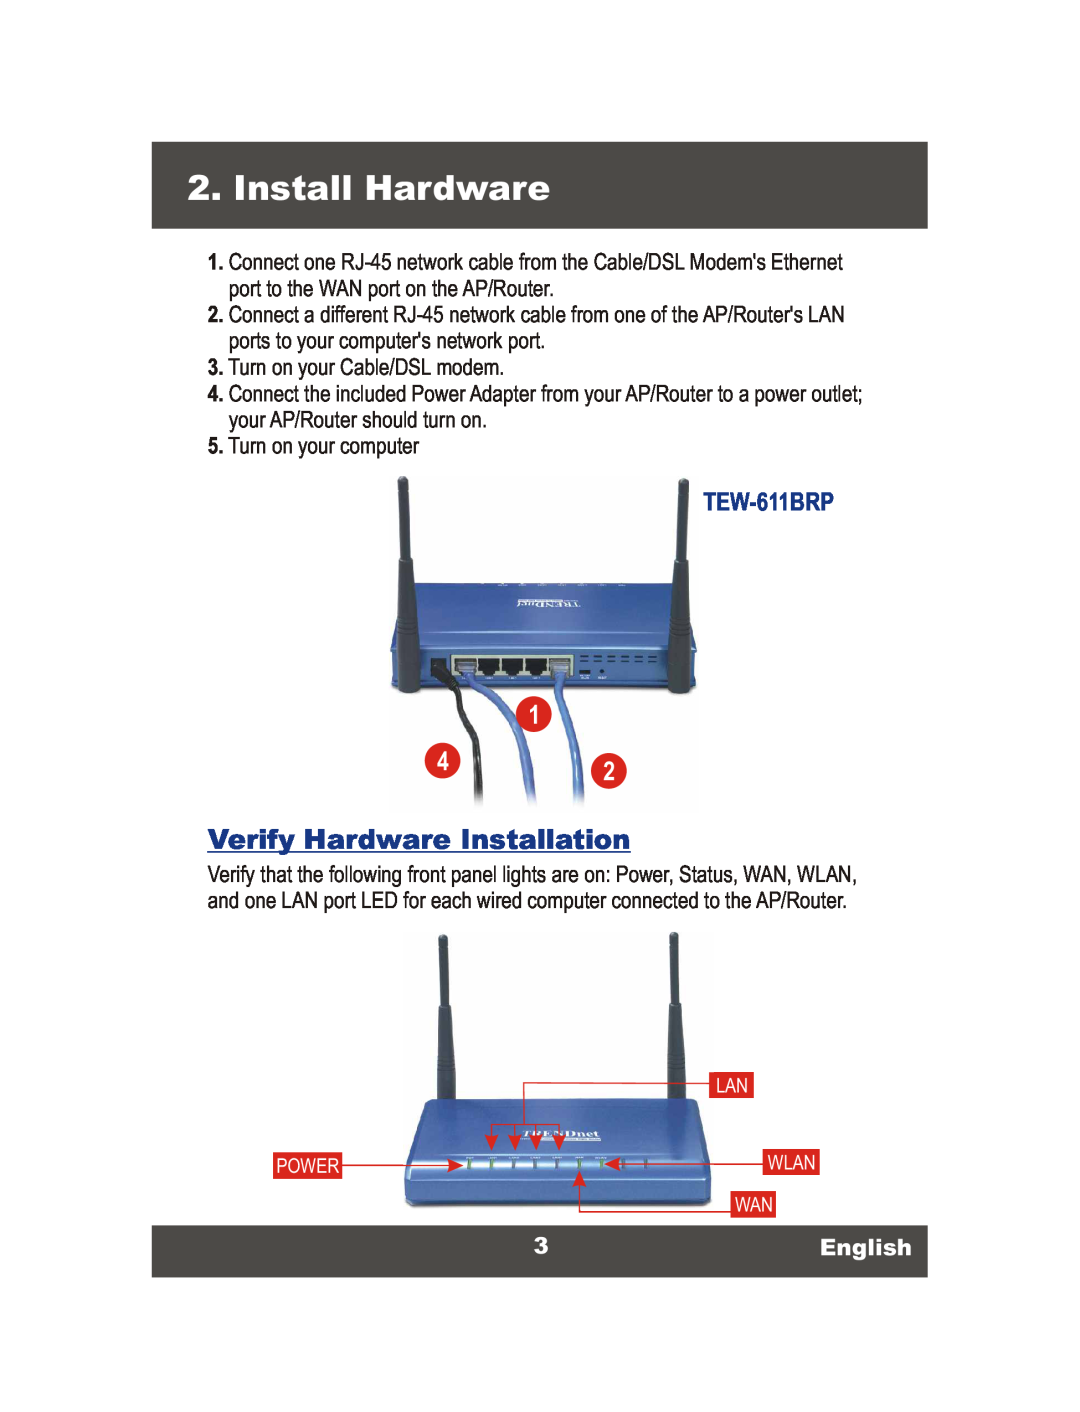 TRENDnet TEW-611BRP manual Install Hardware, Verify Hardware Installation, 3English 